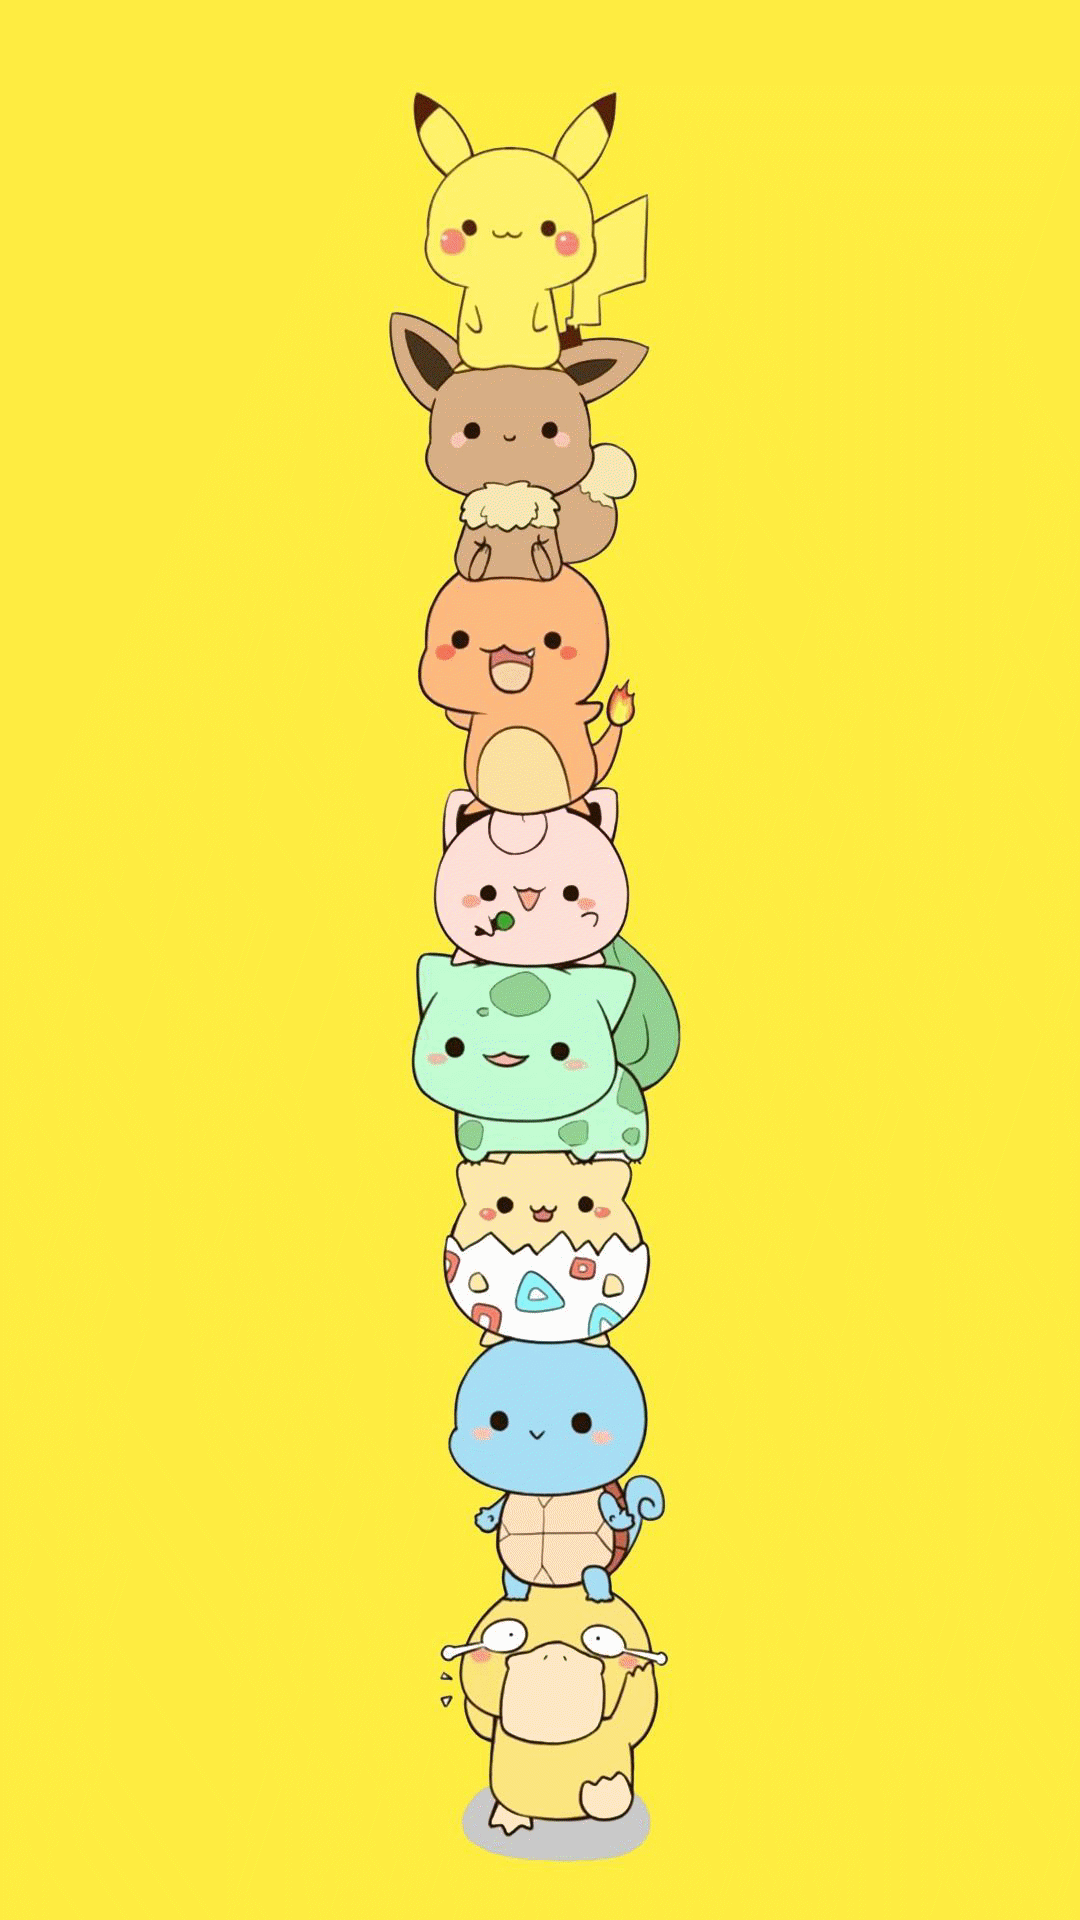 Wallpaper Tumblr In 2020 Cute Cartoon Wallpaper Pokemon Doodles Animated Mango Kawaii Ice Cream